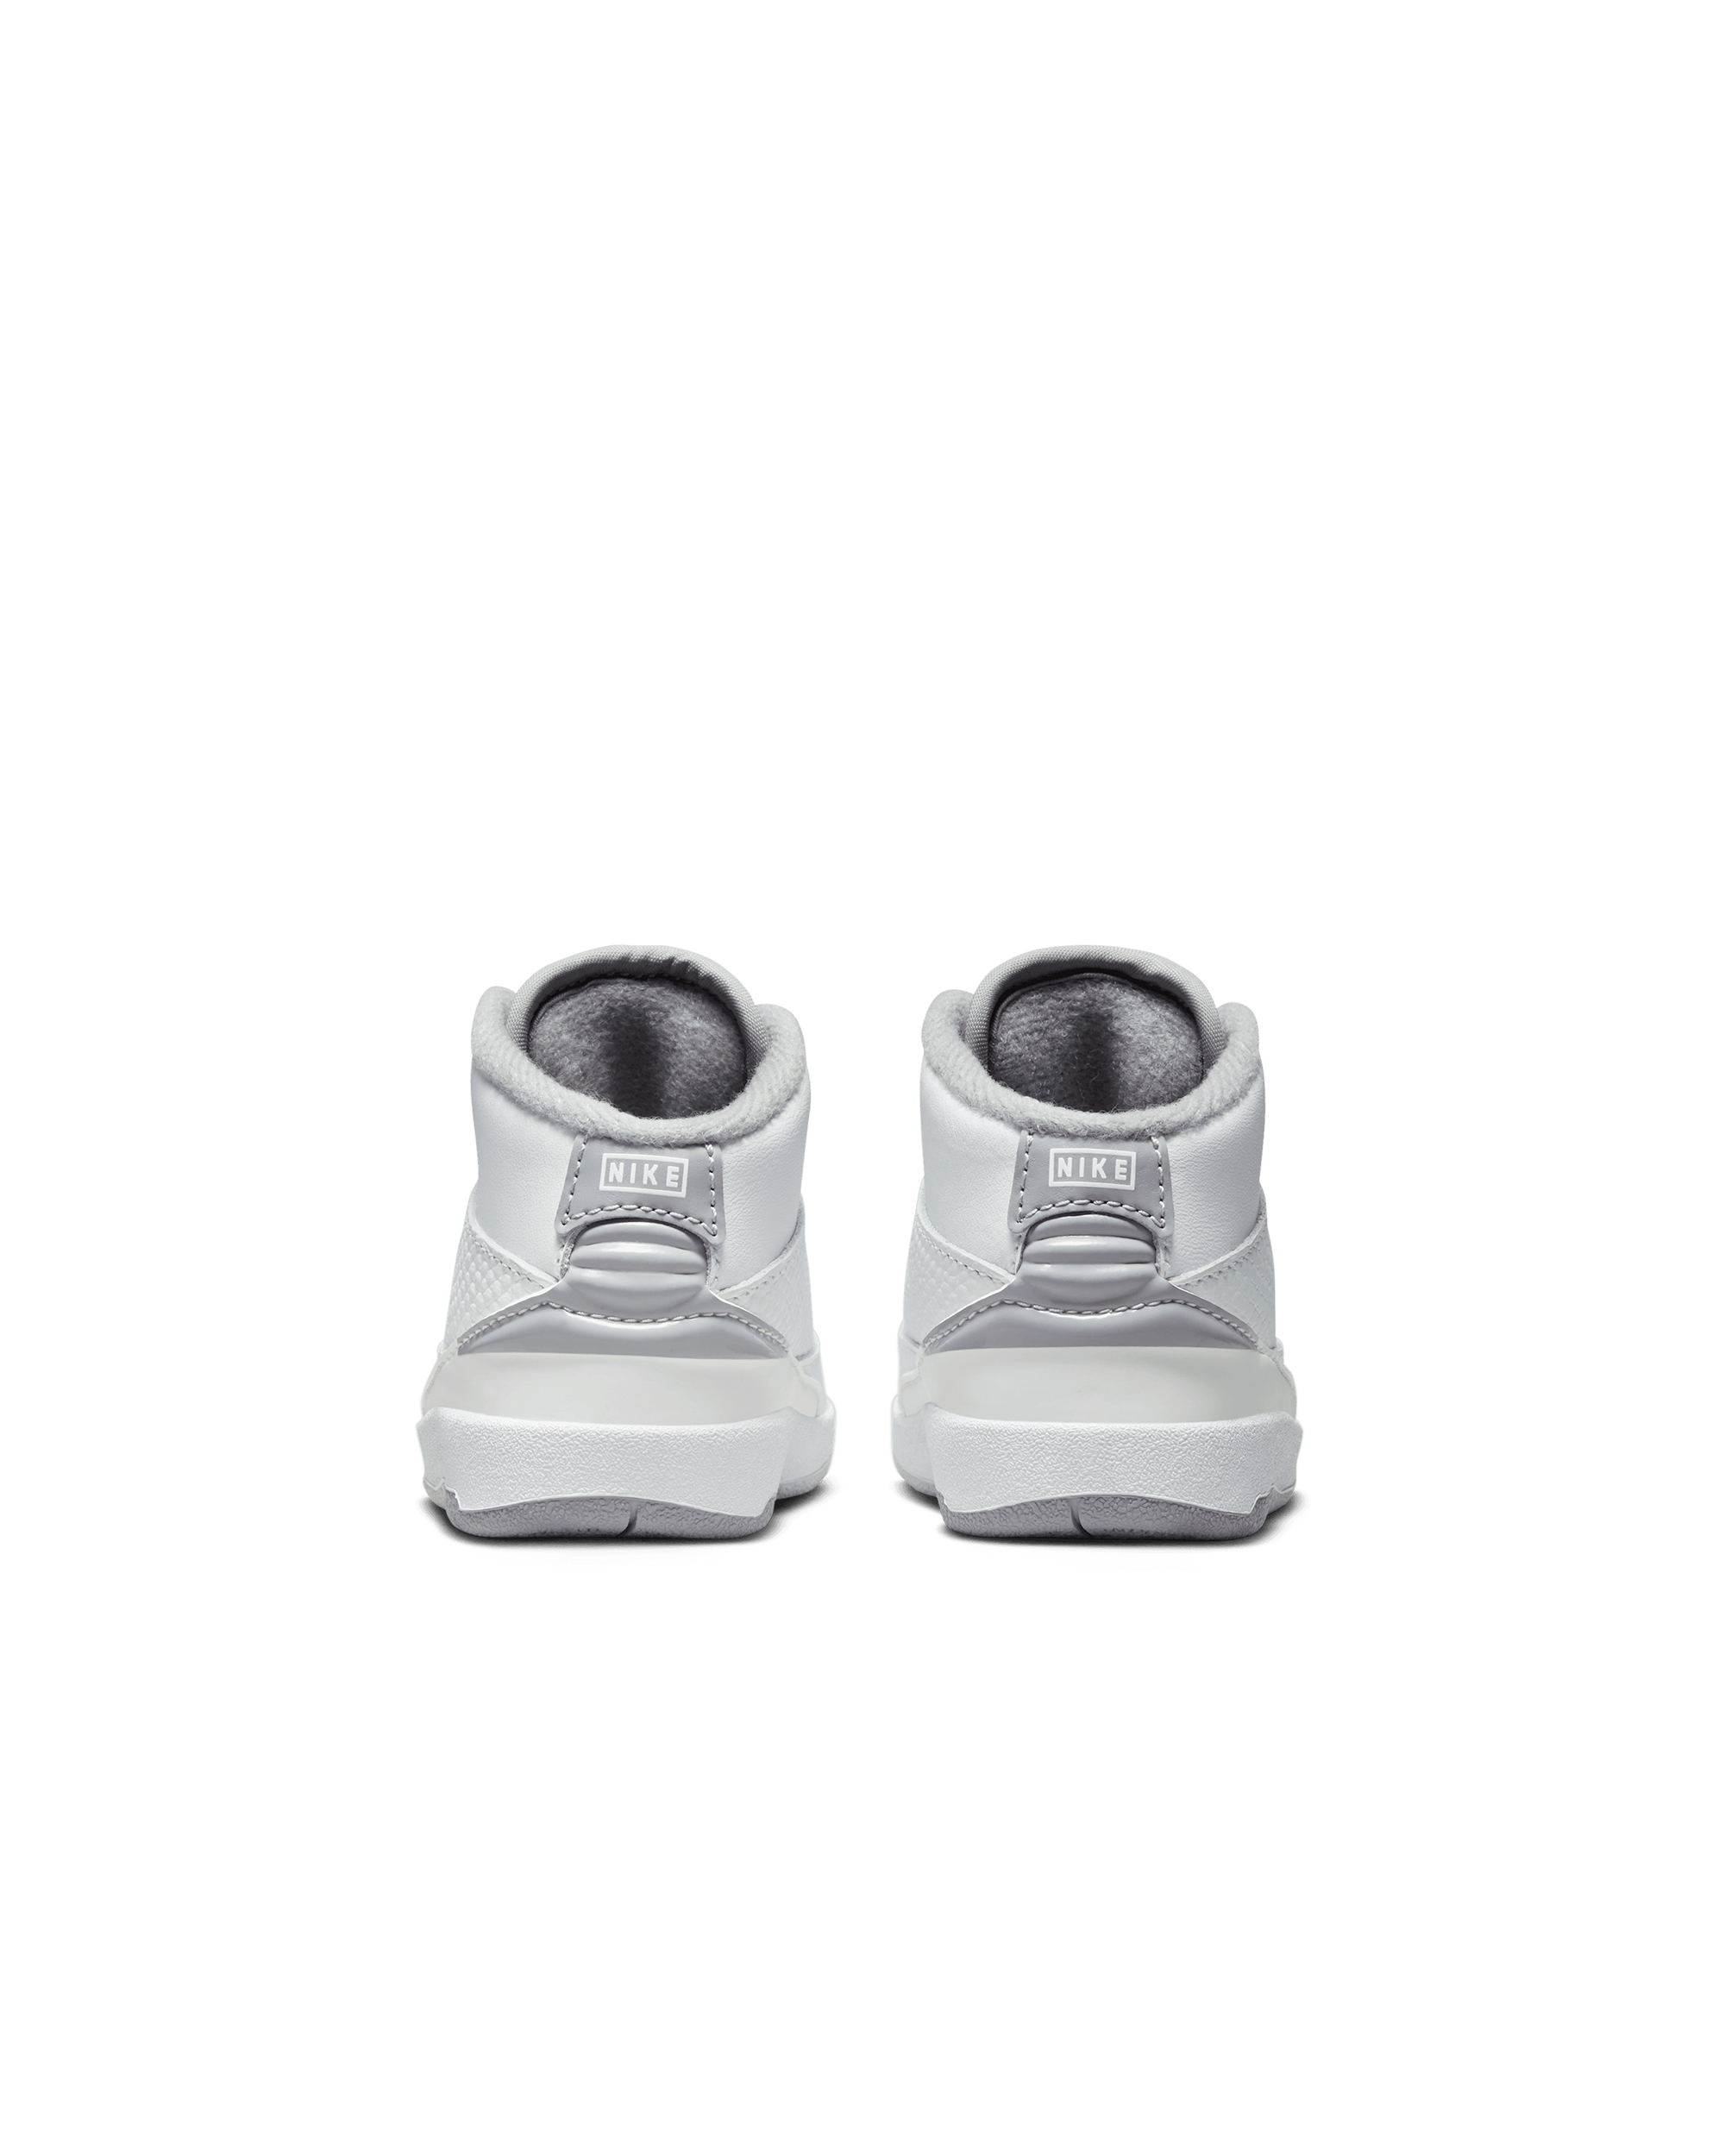 Jordan 2 Retro (TD) - White / Cement Grey / Sail